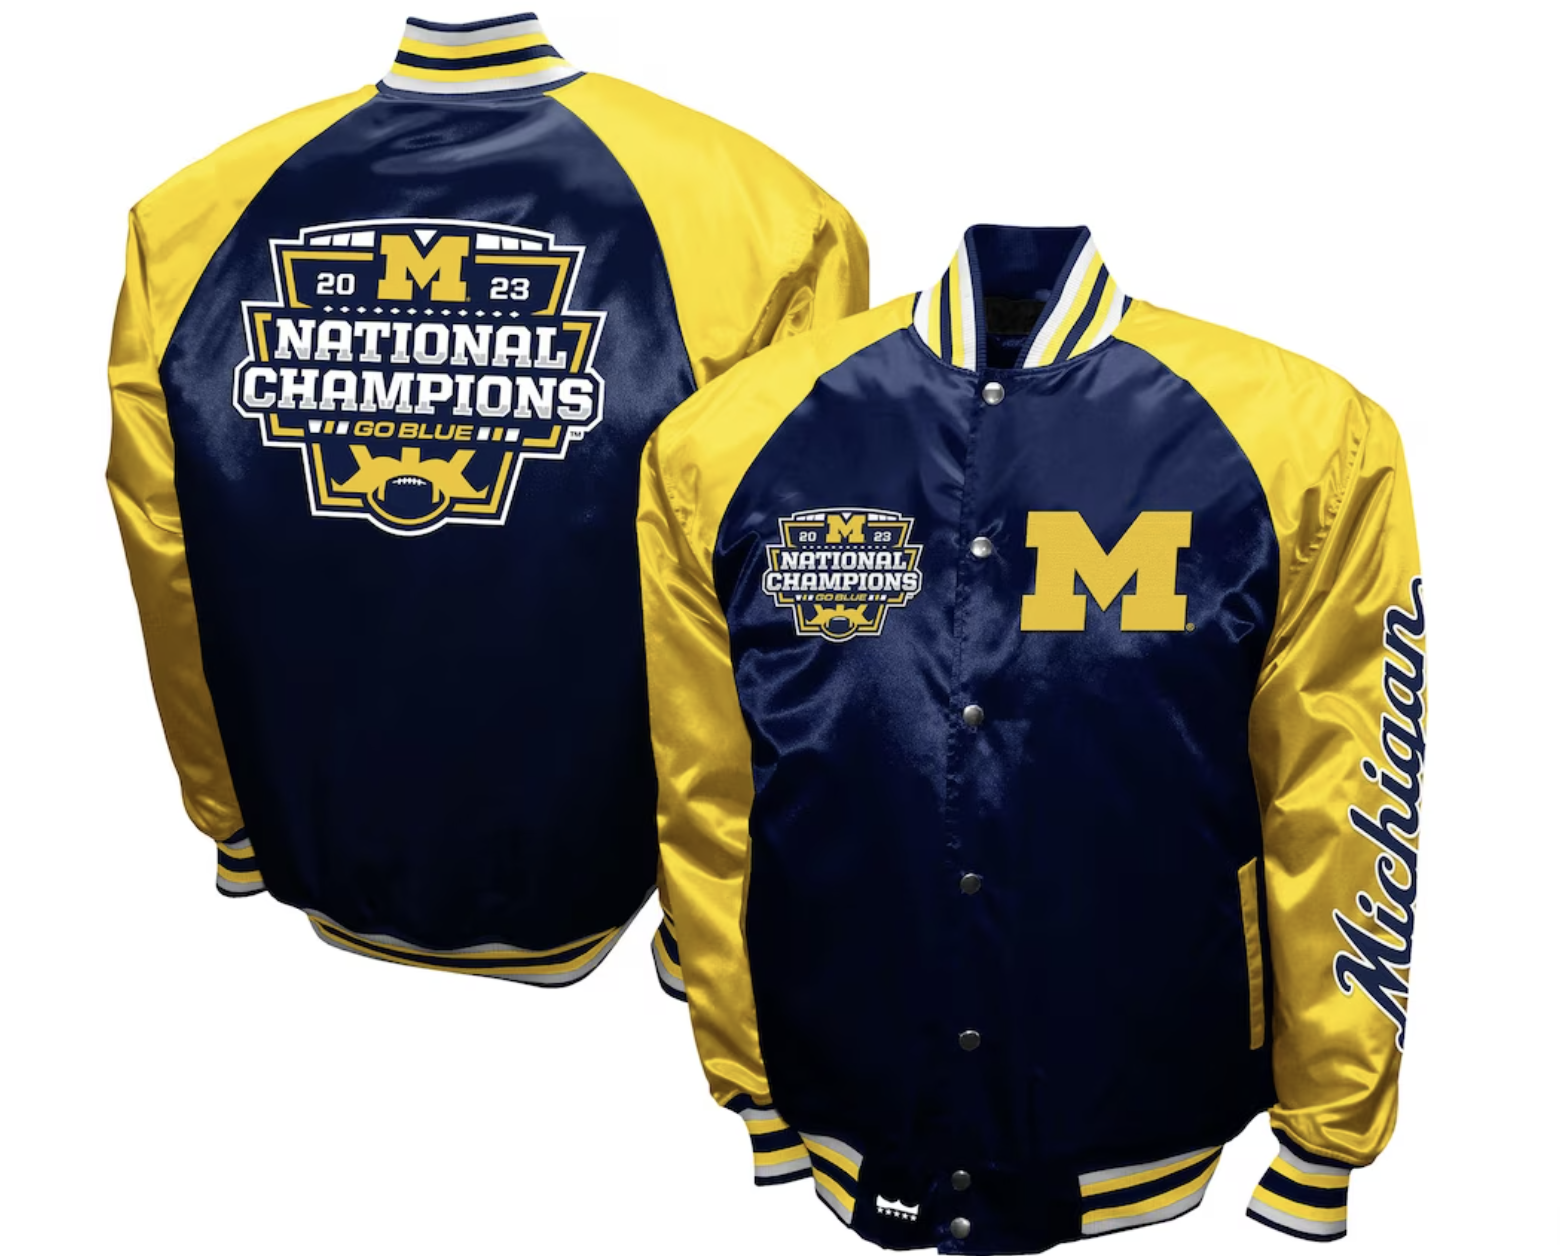 Michigan CFP Champions Gear, Michigan Wolverines Jerseys, Store